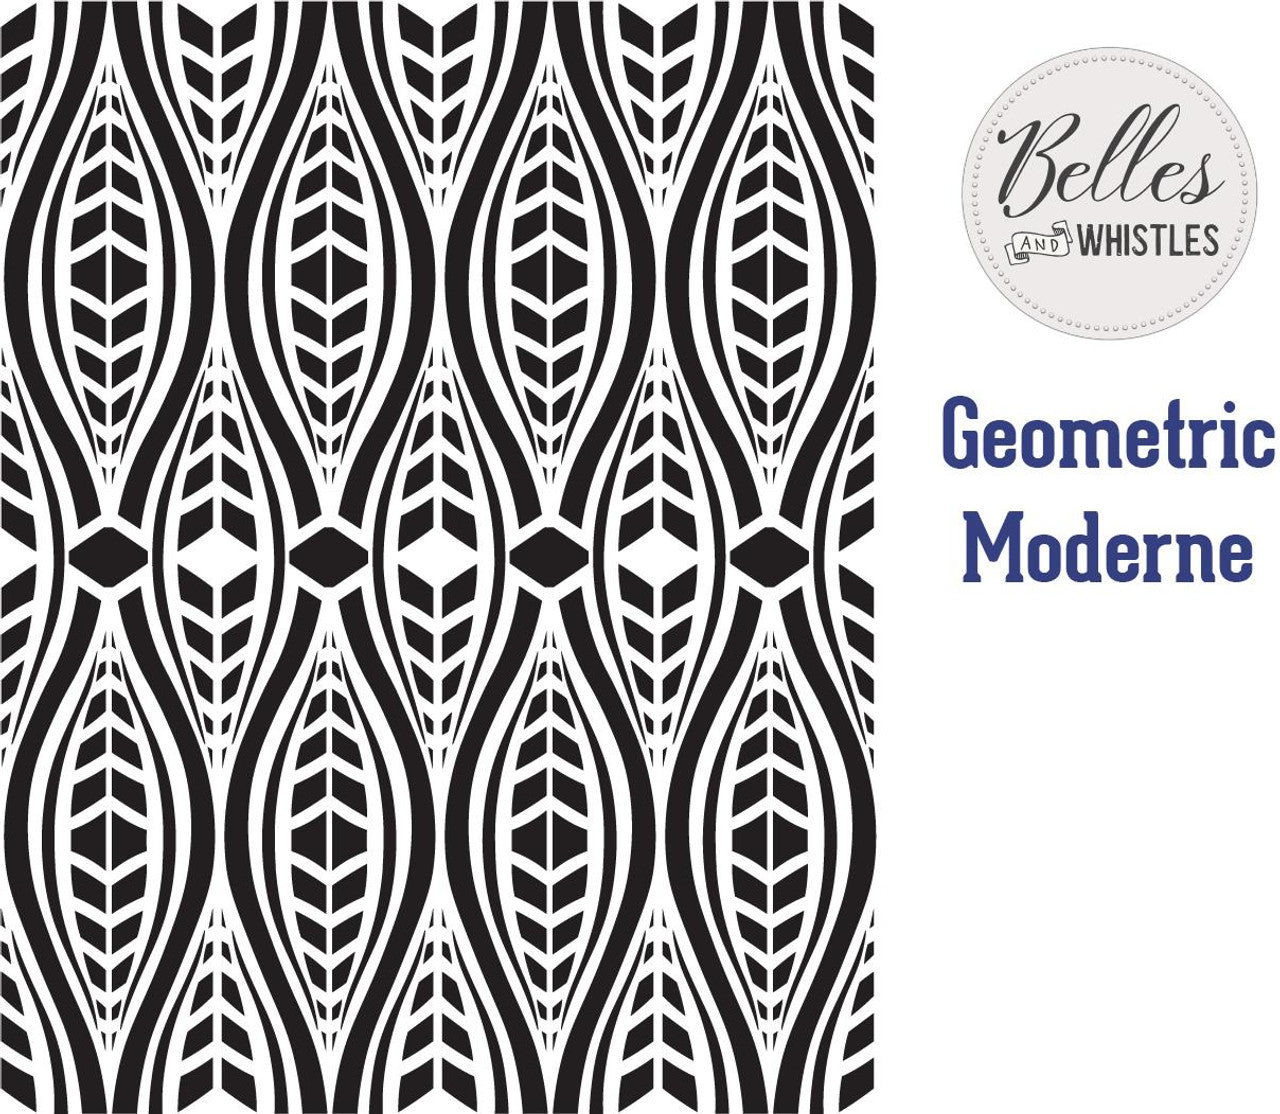 Geometric Moderne stencil | Belles & Whistles